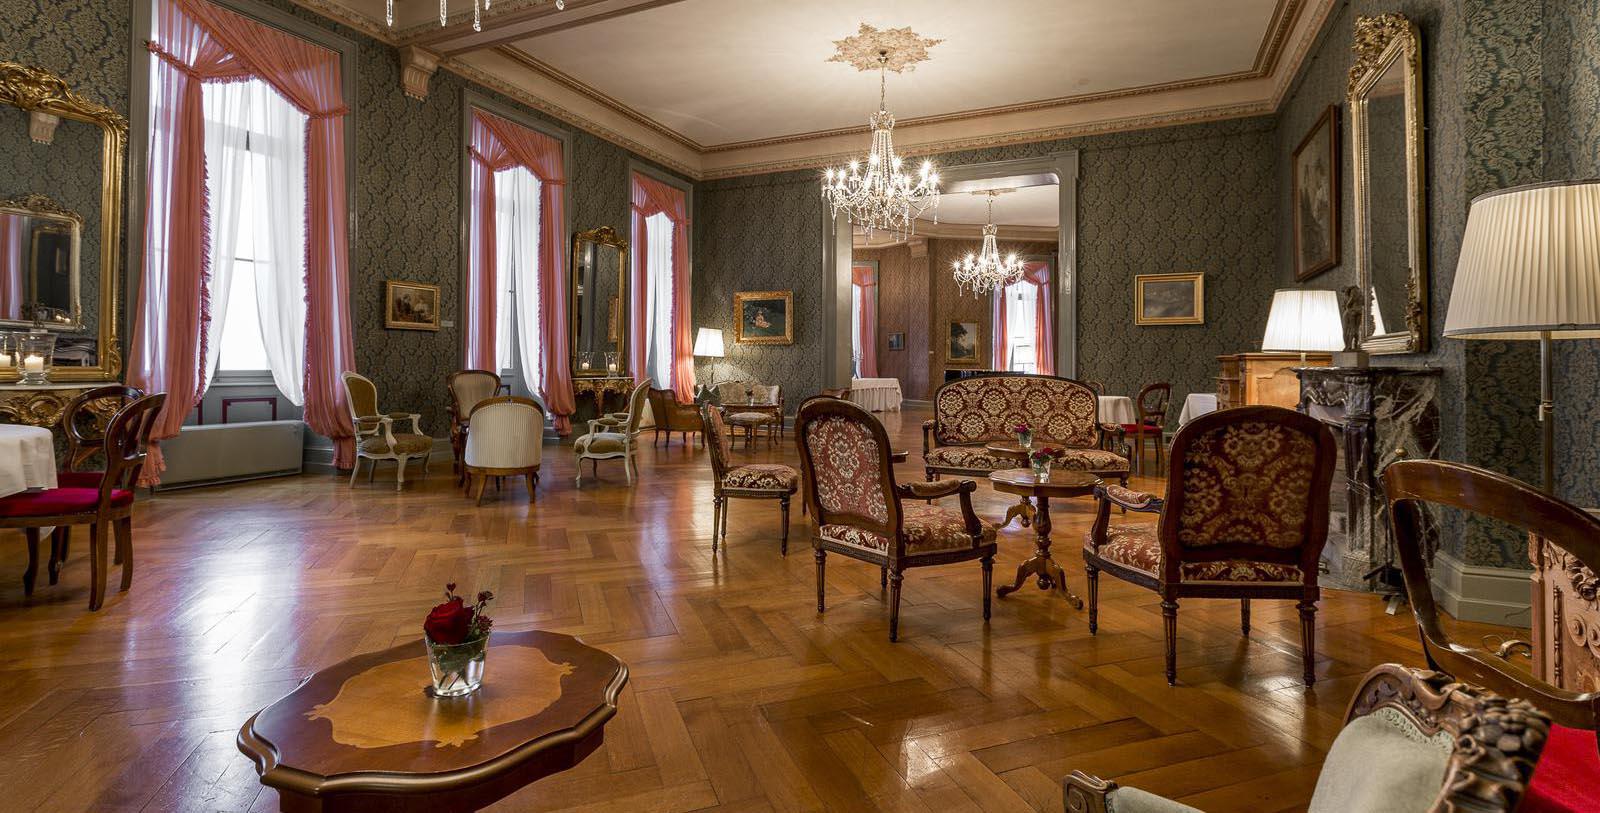 Image of Lobby Seating, Grandhotel Giessbach, Brienz, Switzerland, 1822, Member of Historic Hotels Worldwide, Hot Deals